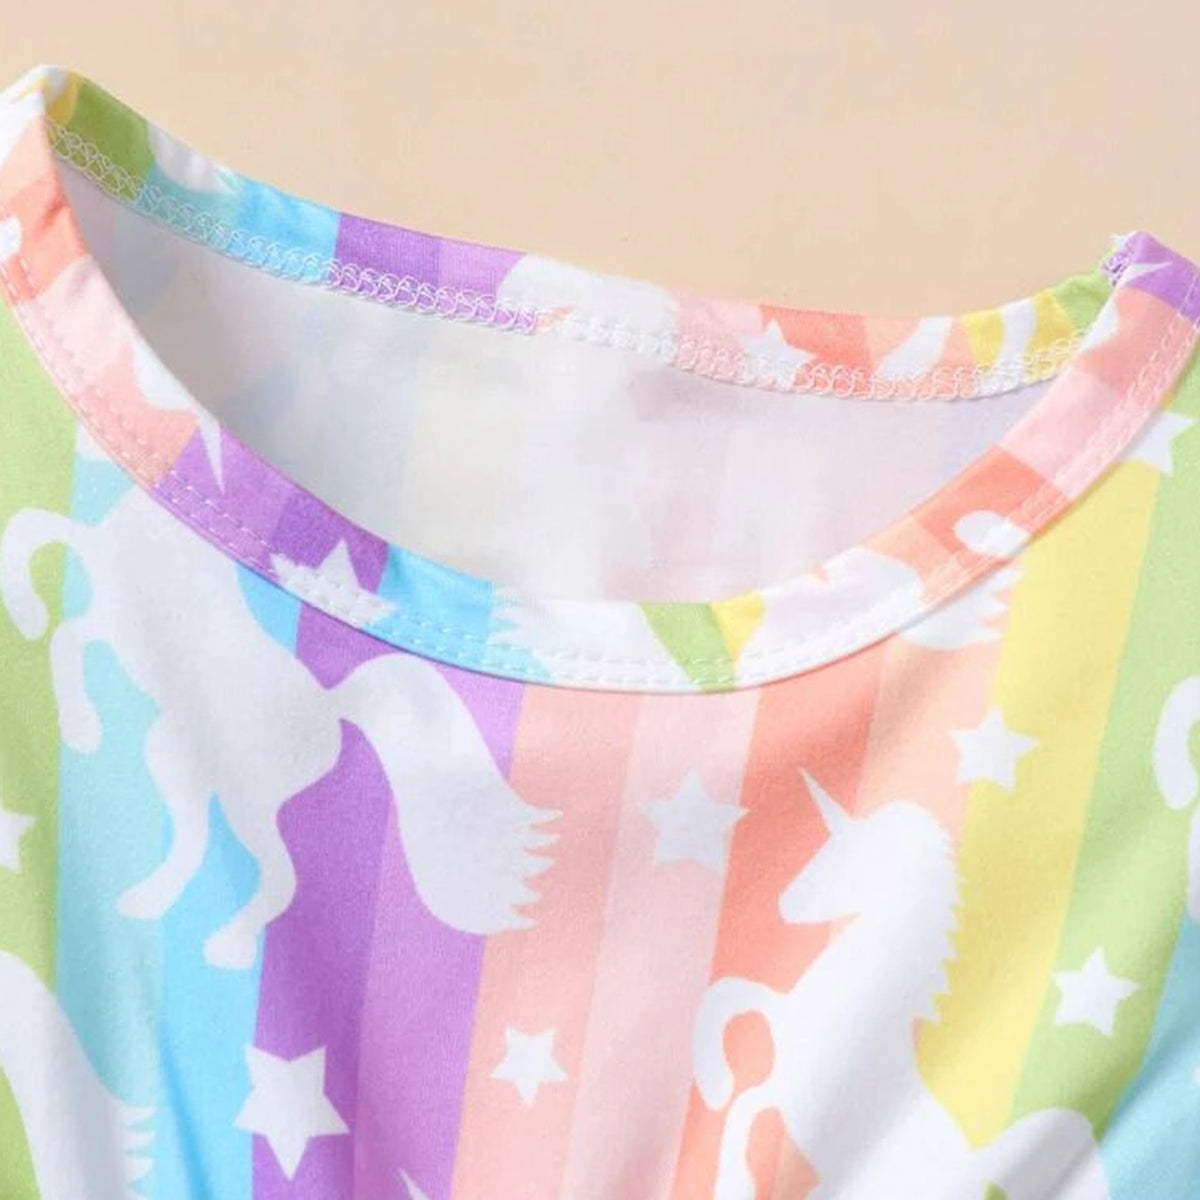 Venutaloza Baygirl UniCorn Contrast Designer Dresses & Frocks for Baby Girl.